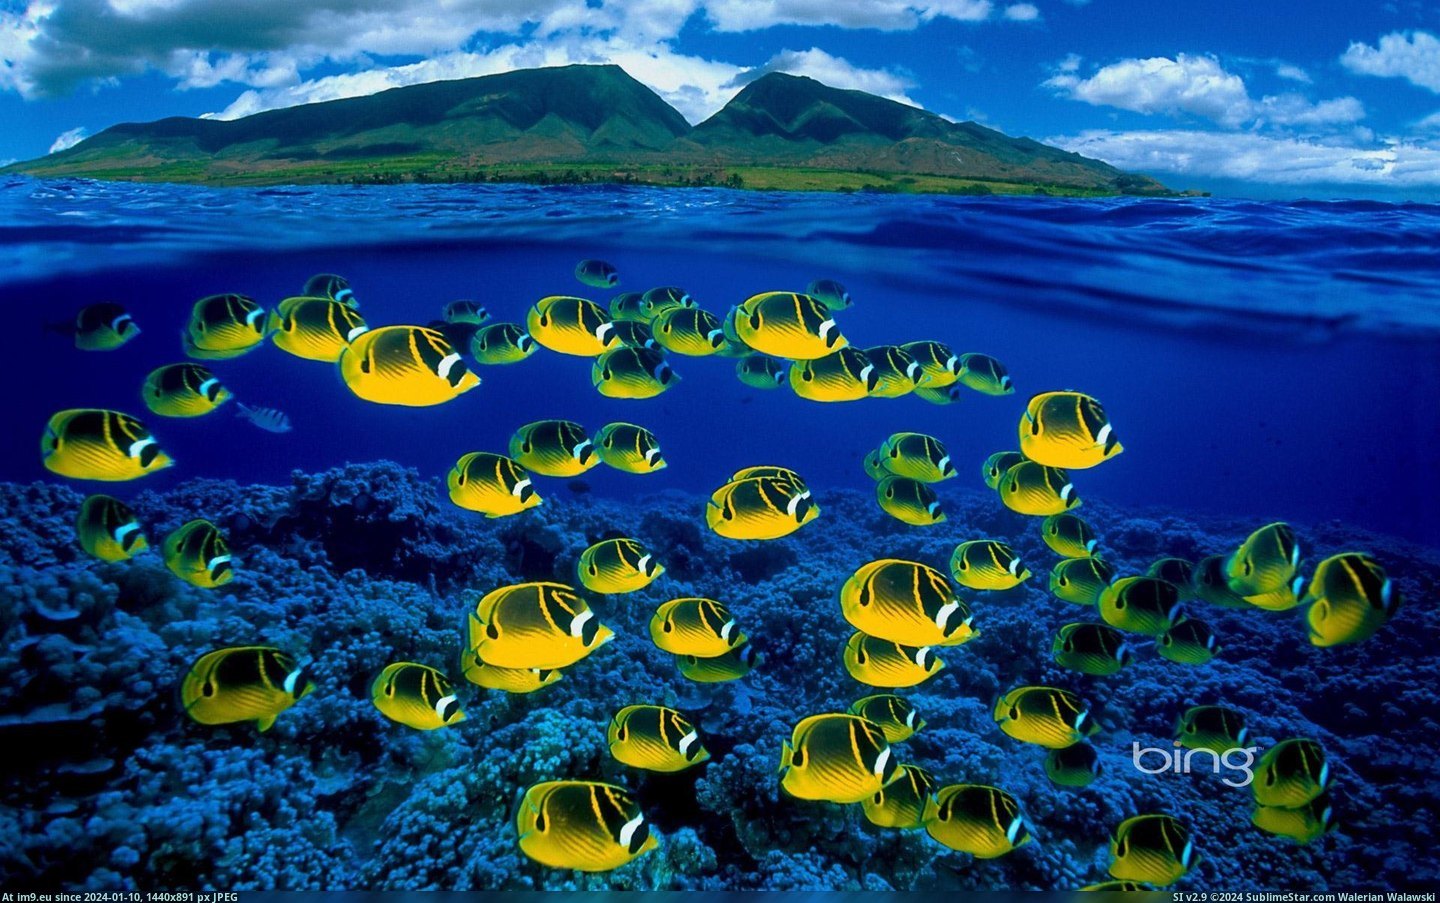 Composite image of raccoon butterflyfish underwater, Maui, Hawaii (in Bing Photos November 2012)